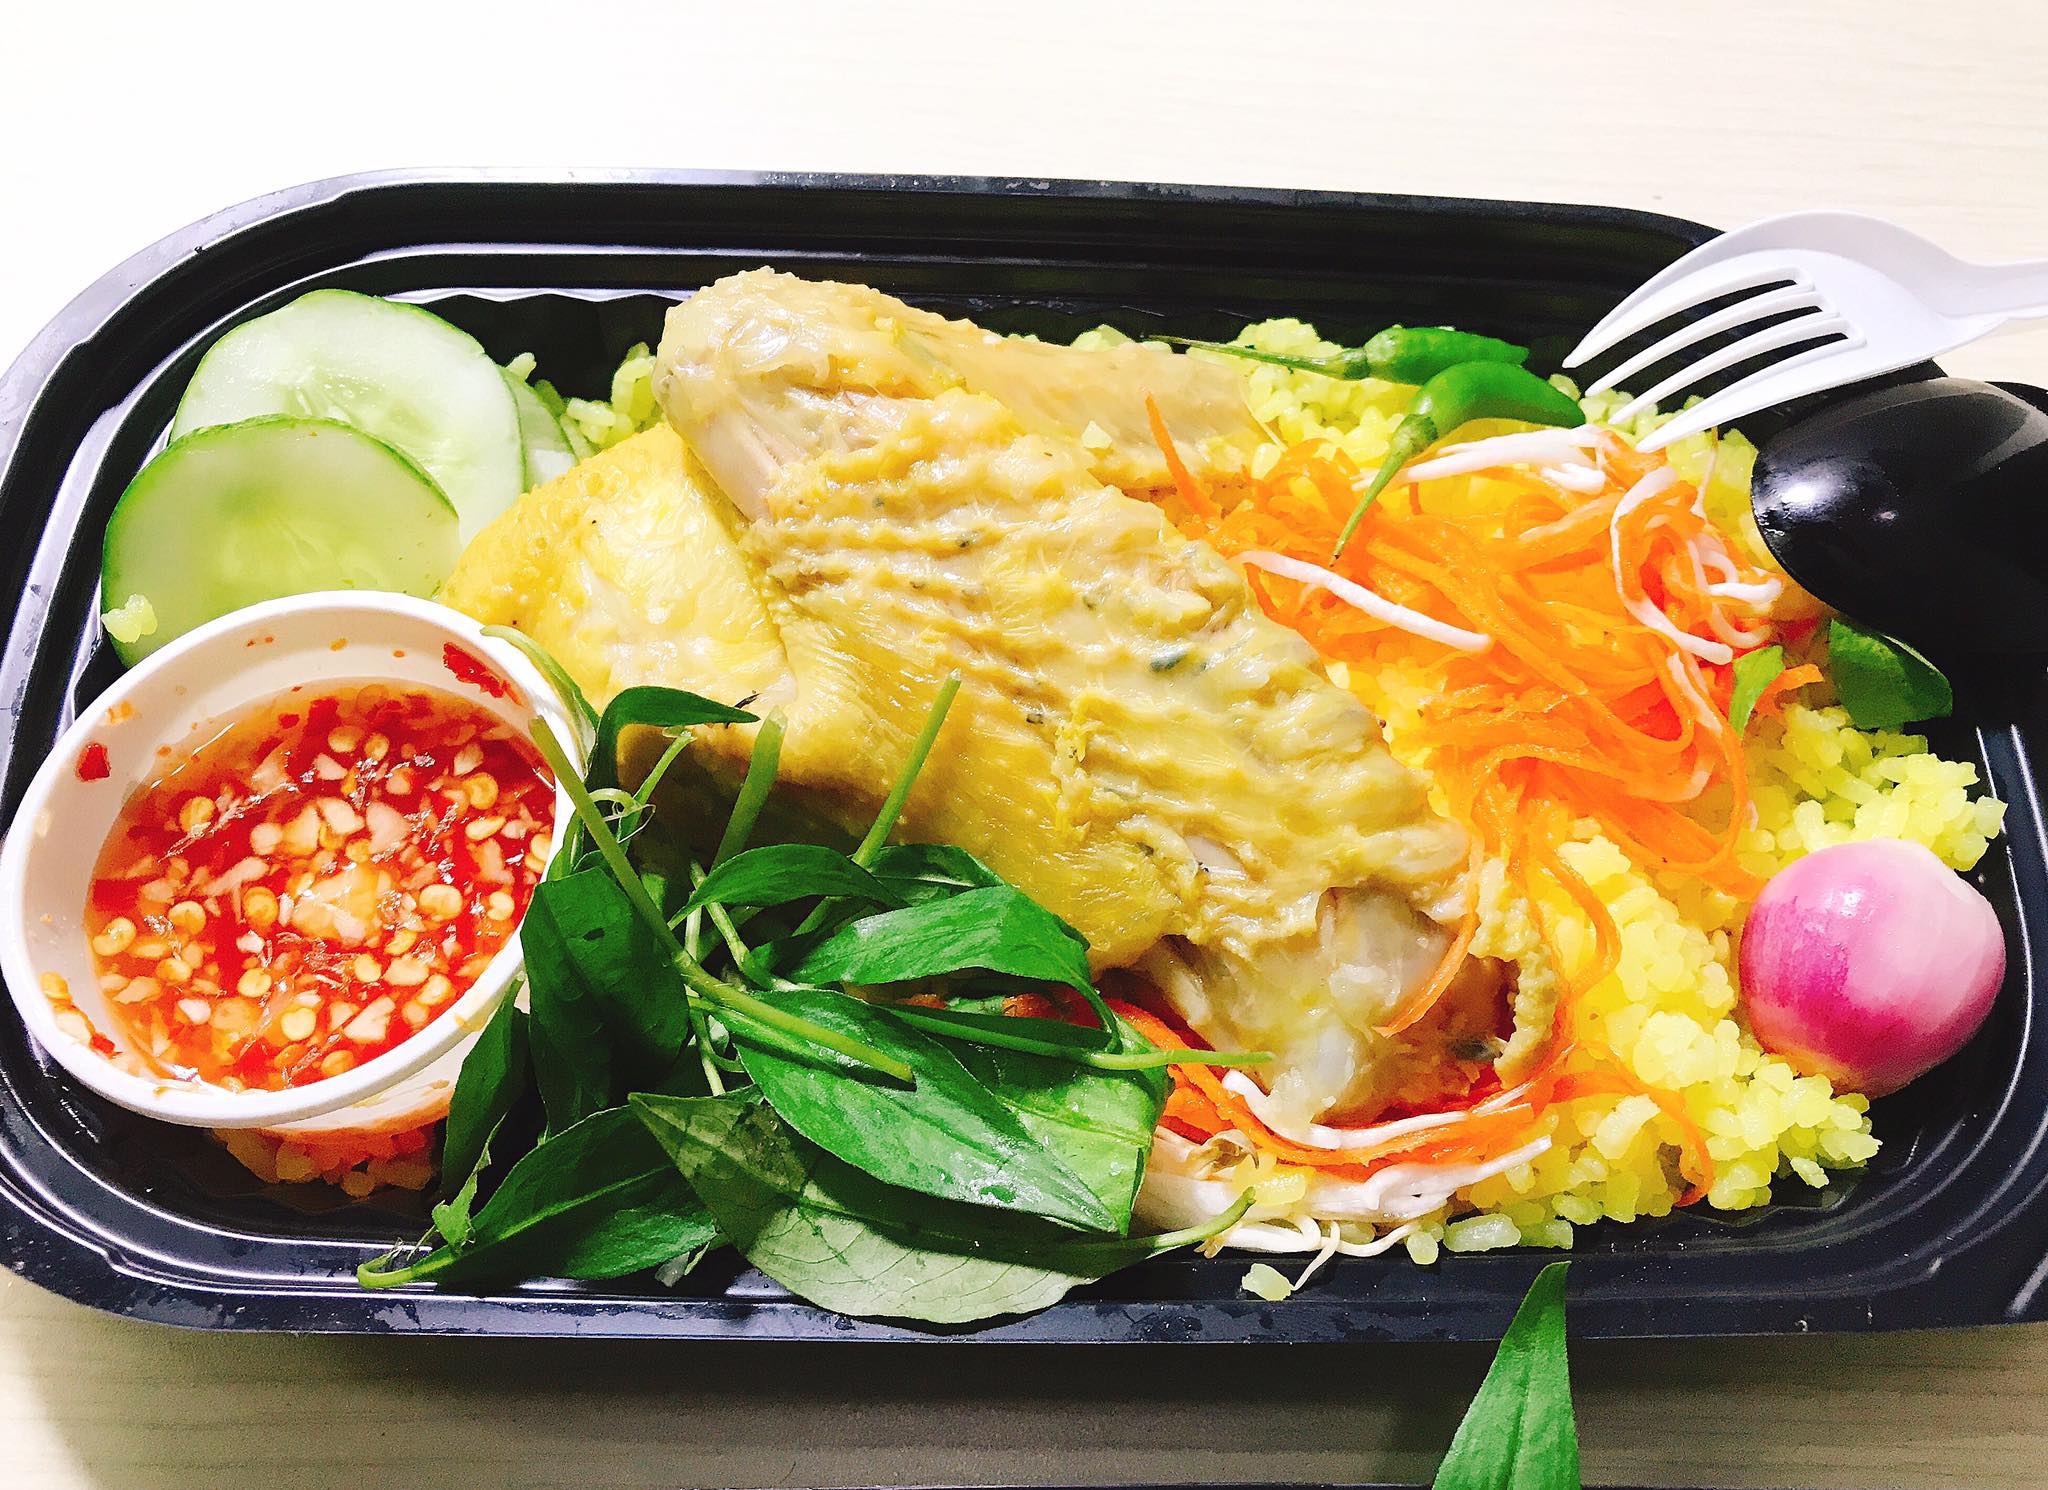 Phu Yen Chicken Rice (Com Ga) - The popular food at Phu Yen Vietnam